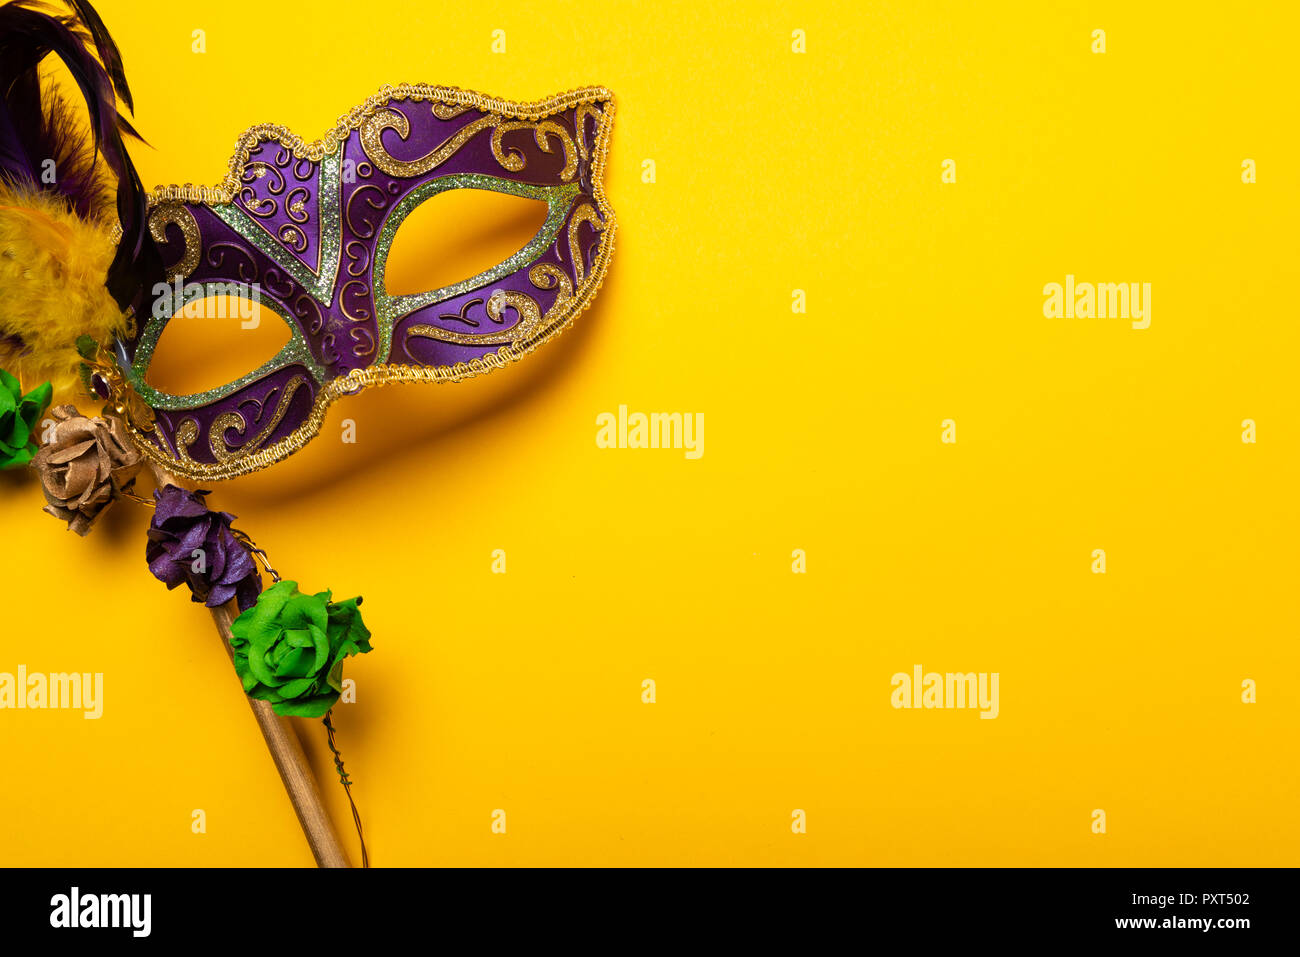 Mardi Gras mask on a yellow background Stock Photo